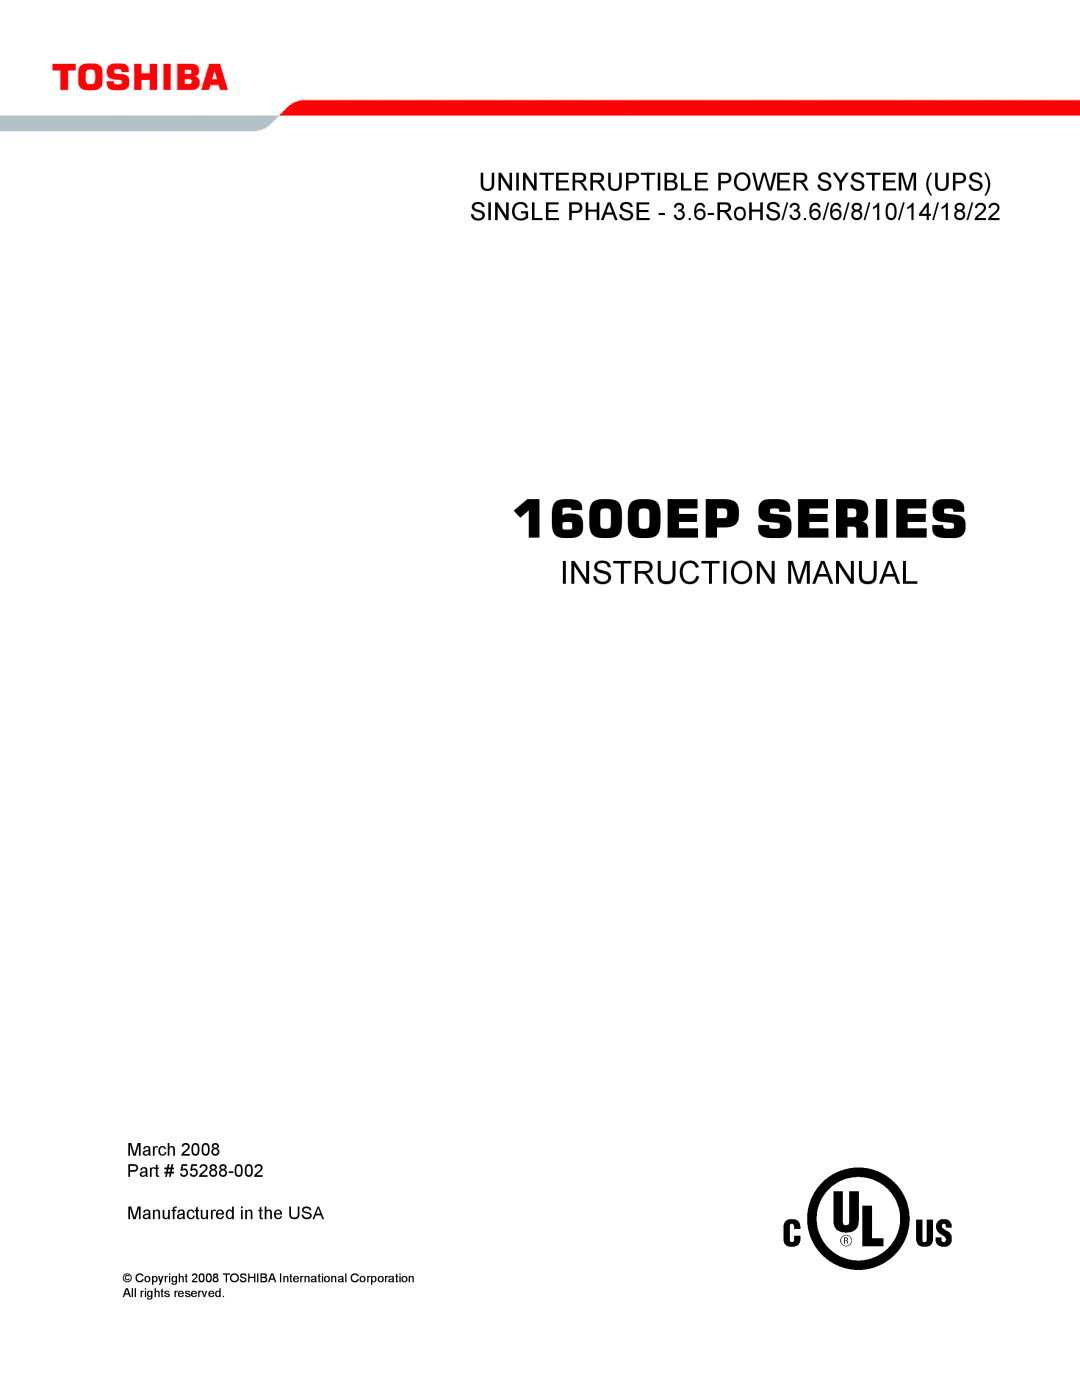 Toshiba 1600EP Series manual 1600EP SERIES, instruction MANUAL 